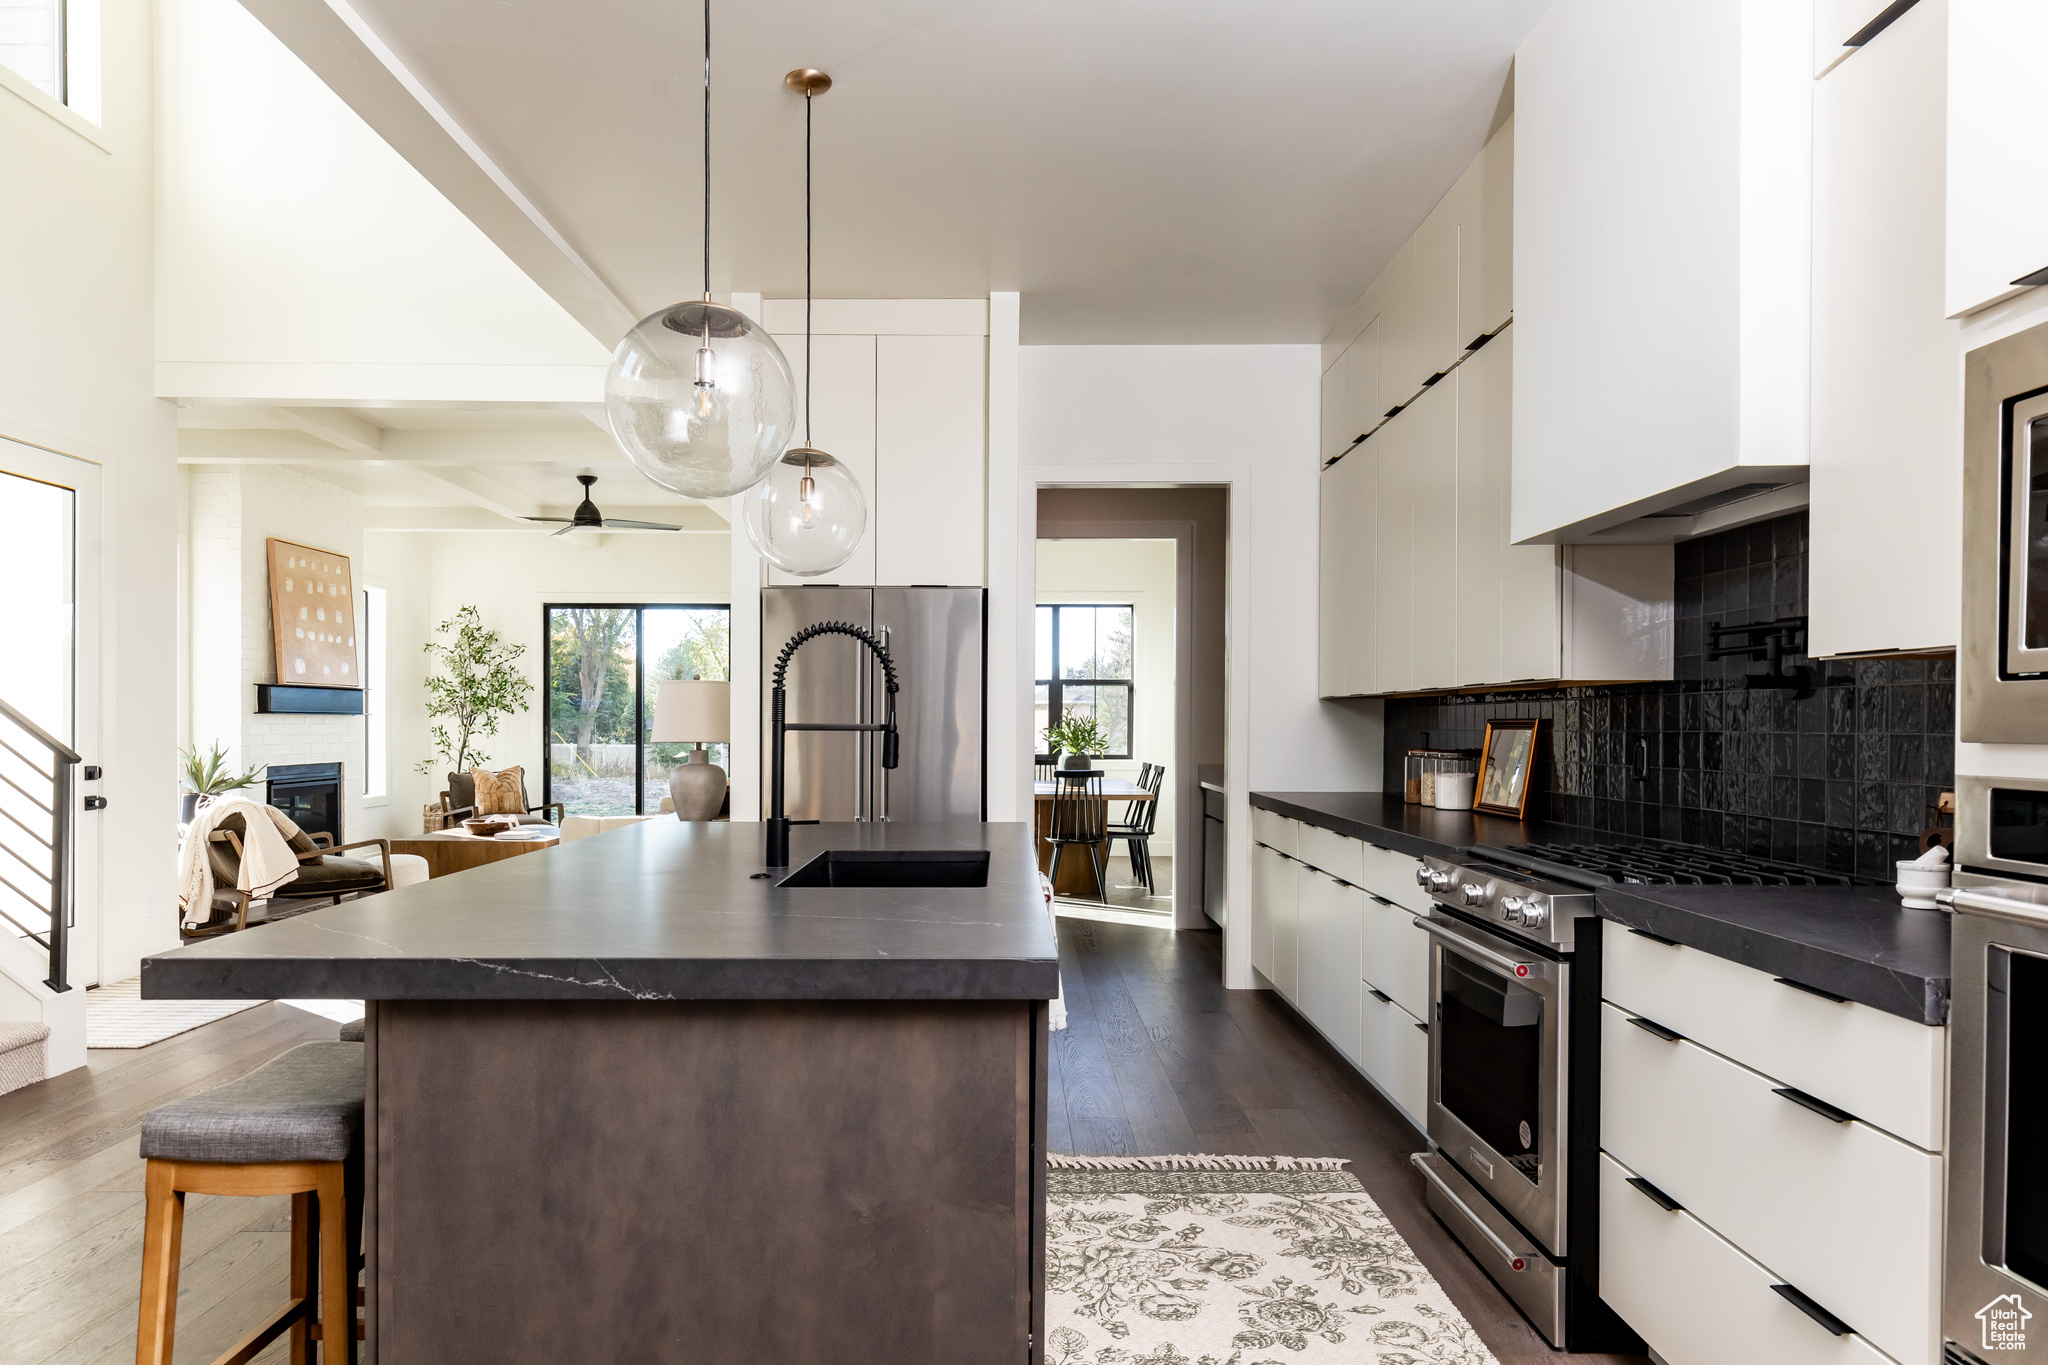 Kitchen with backsplash, stainless steel appliances, ceiling fan, dark wood-type flooring, and sink